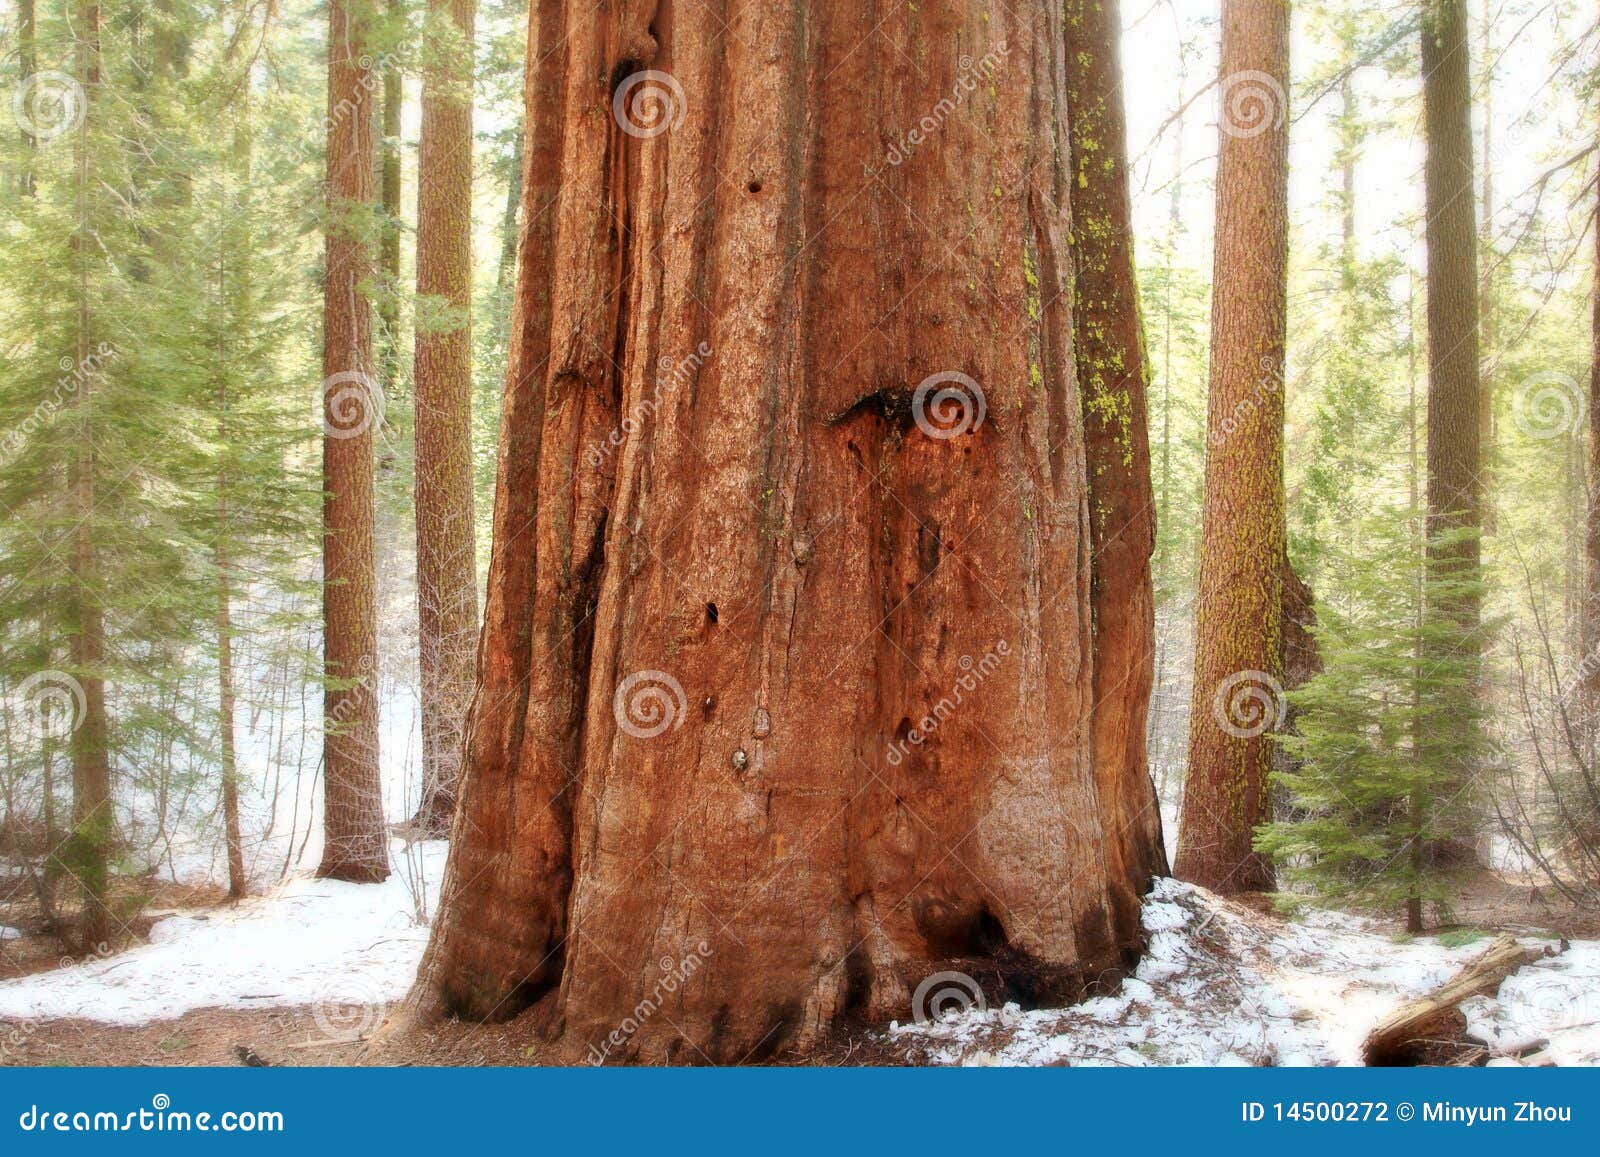 giant sequoias,yosemite national park